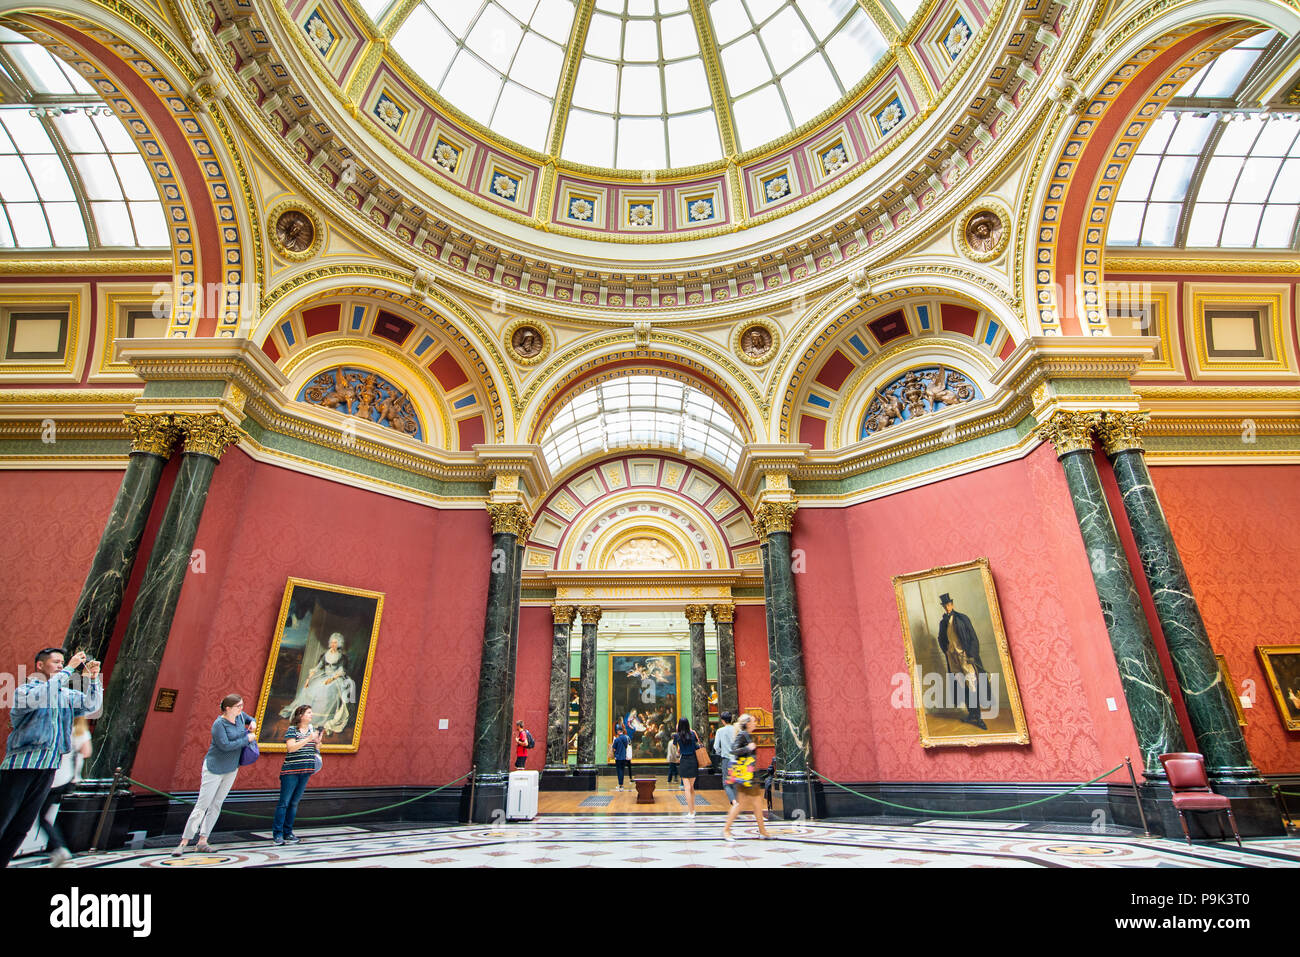 La National Gallery, London, UK Banque D'Images